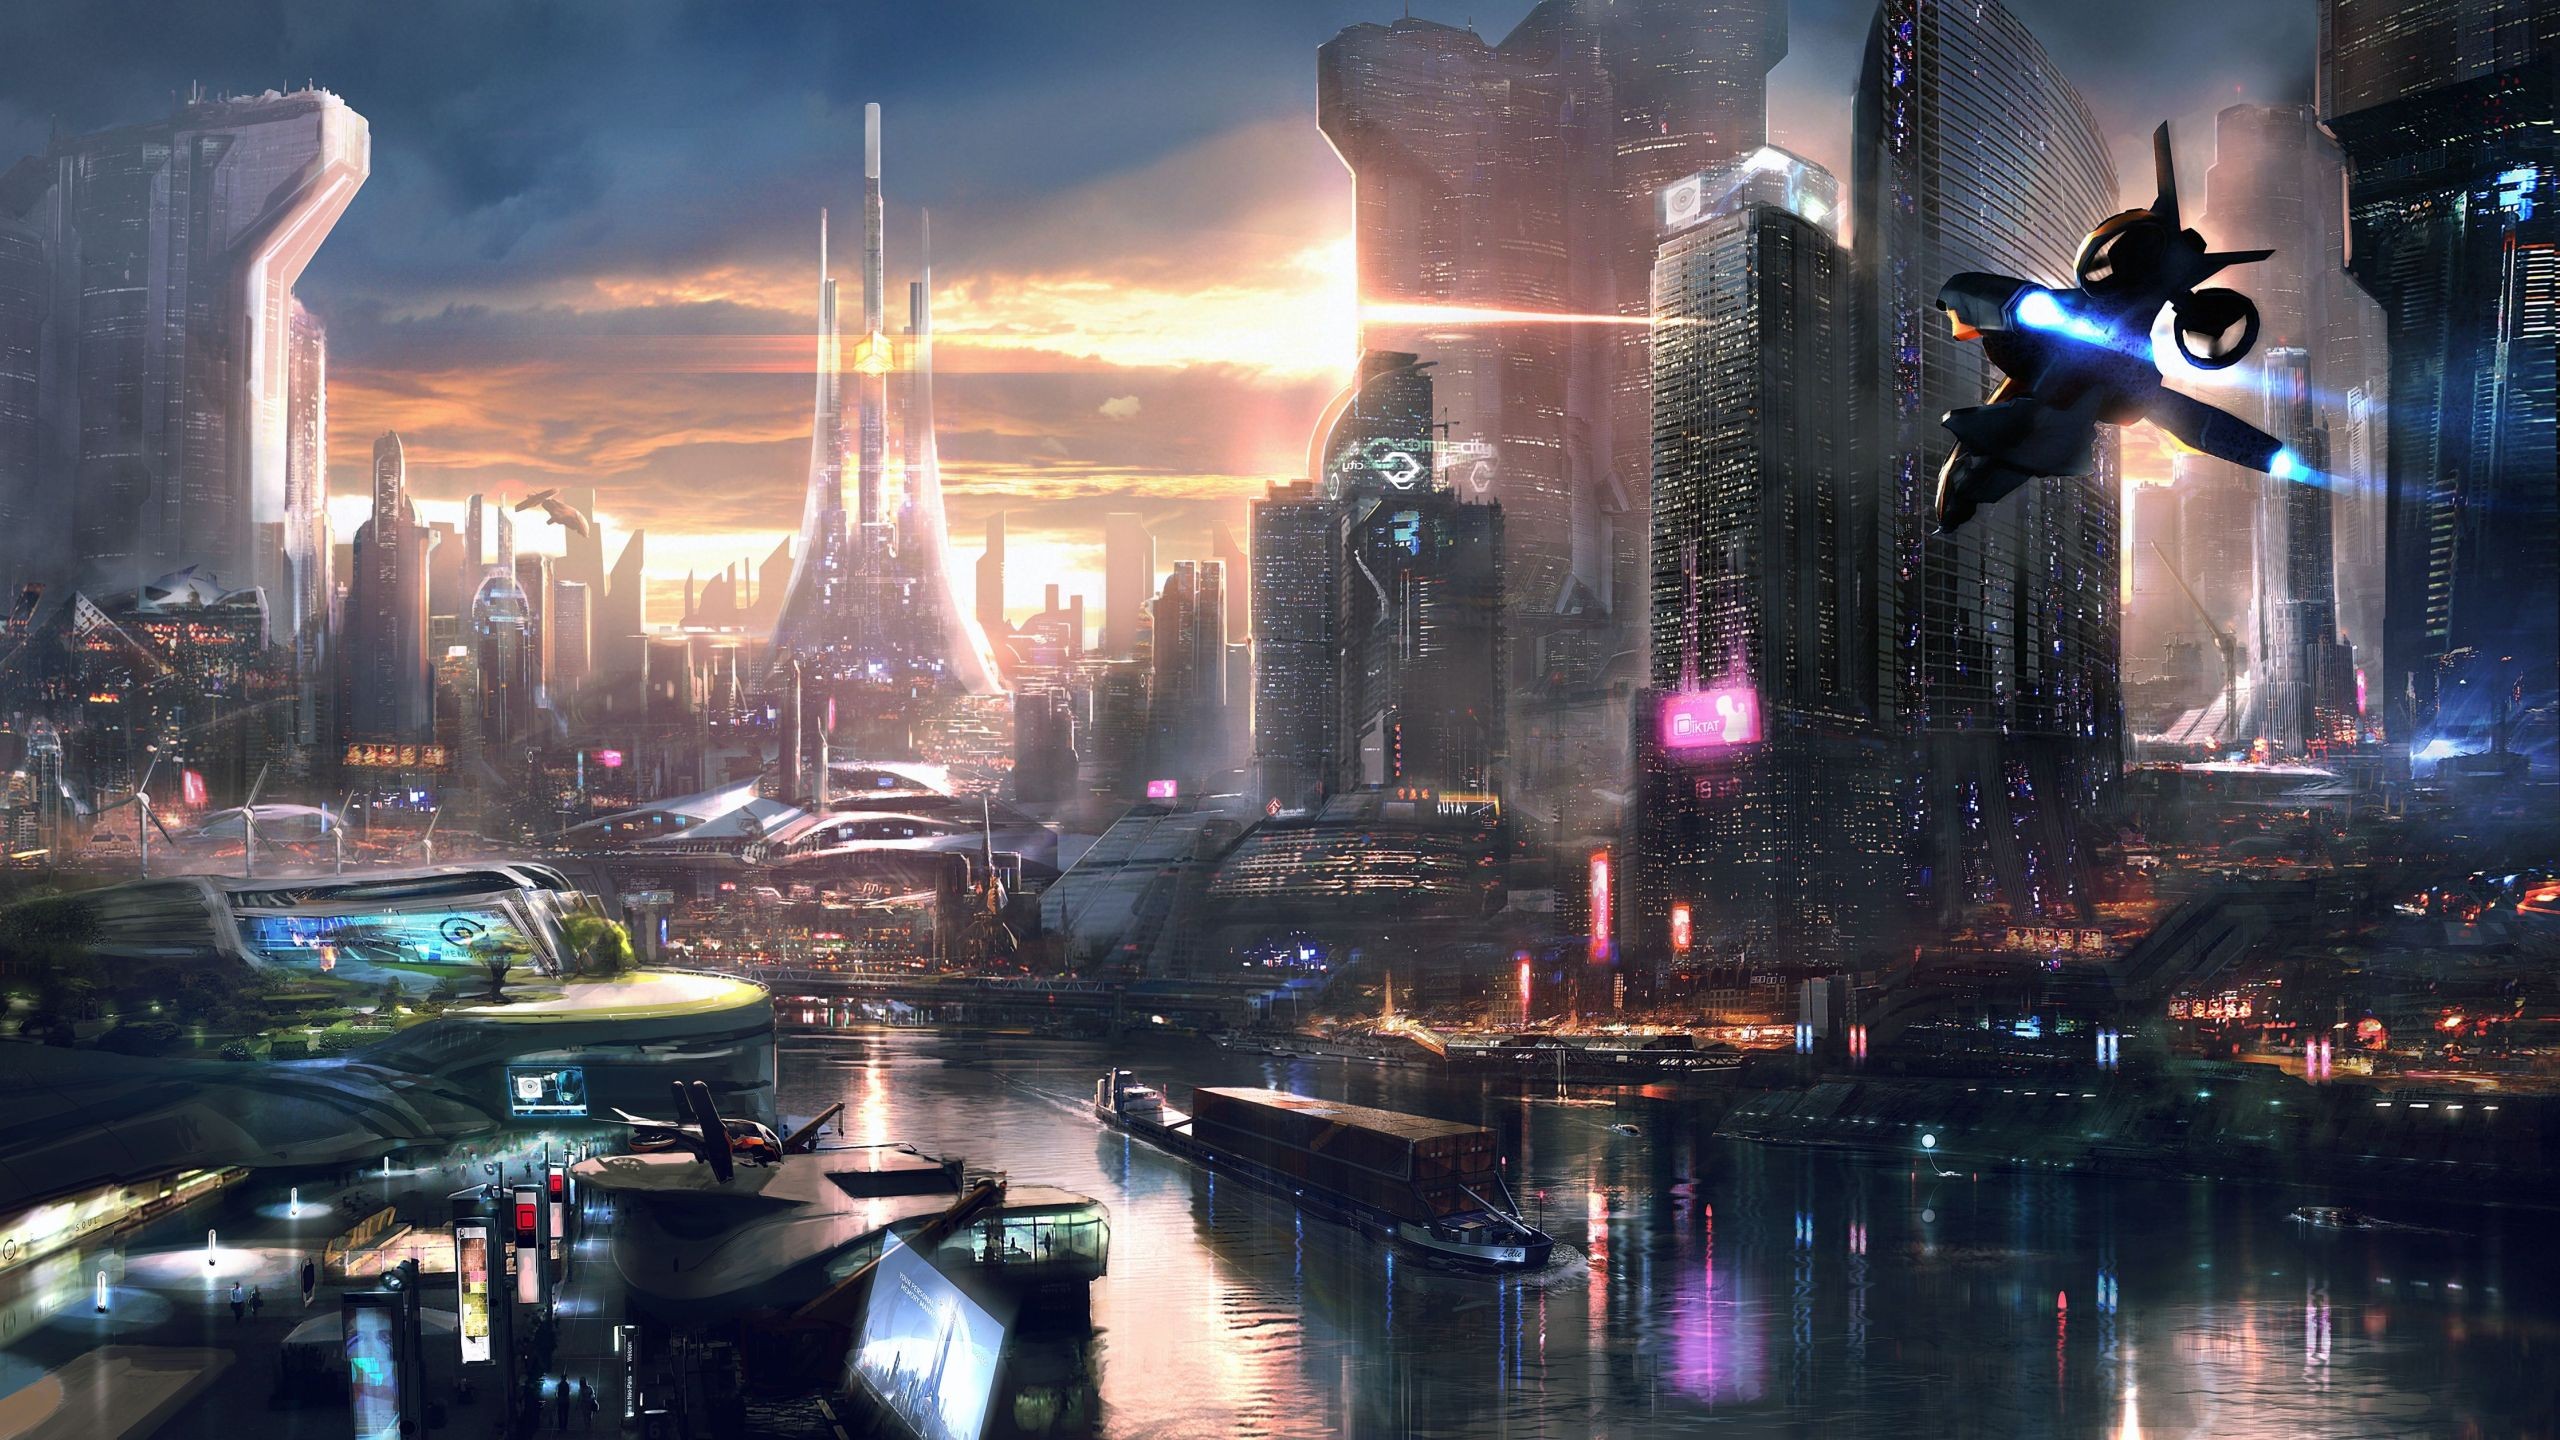 General 2560x1440 Remember Me video games city futuristic cityscape concept art science fiction futuristic city cyberpunk PC gaming